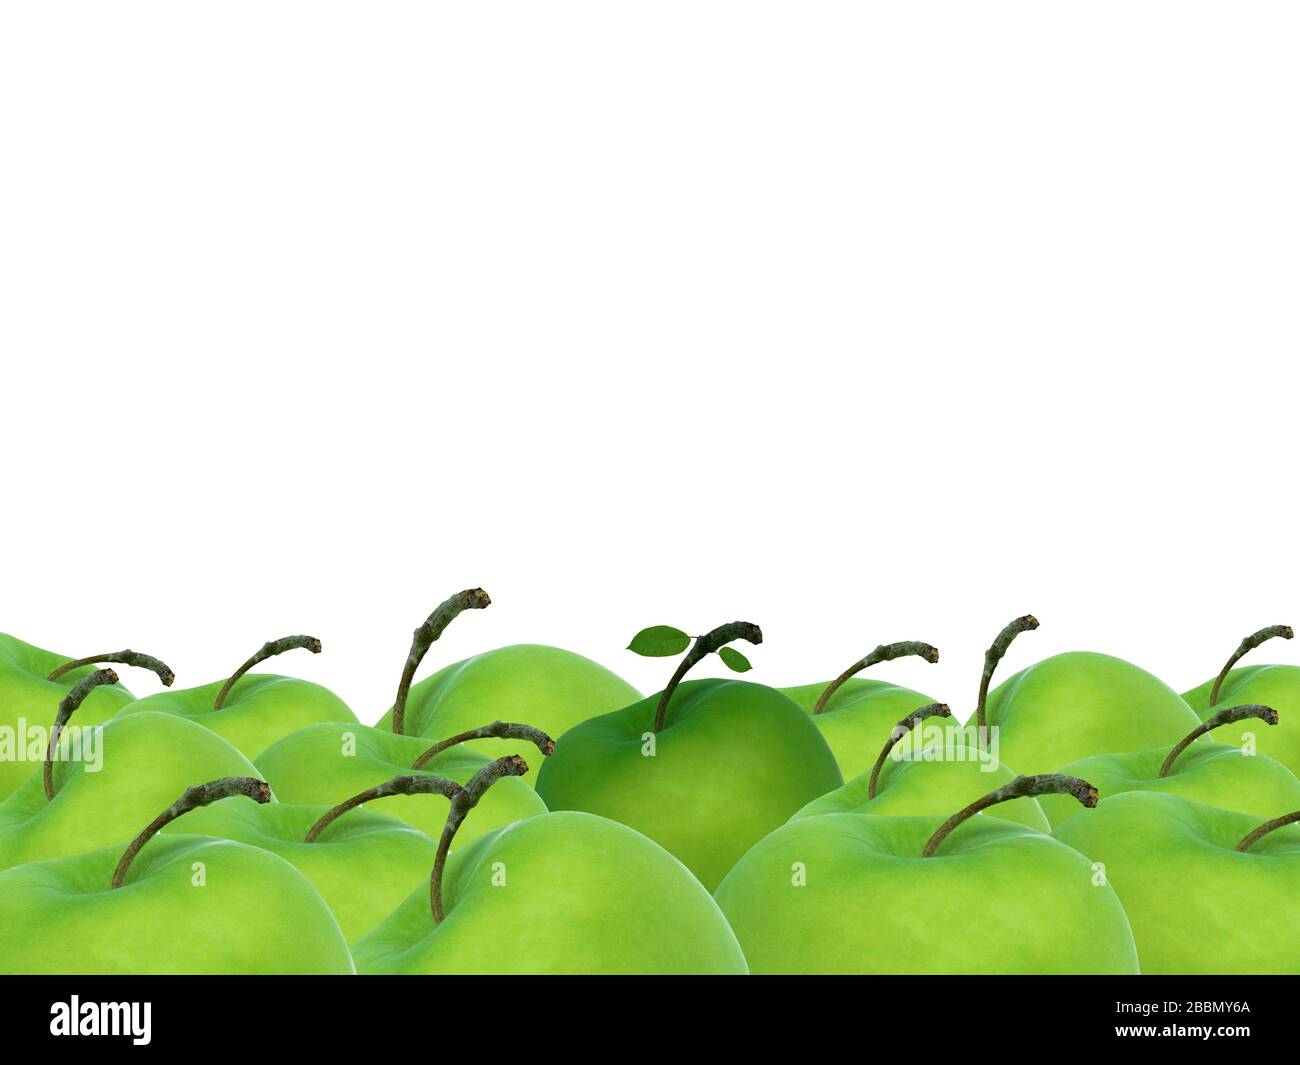 manzanas verdes primer plano fondo horizontal concepto de confianza Foto de stock